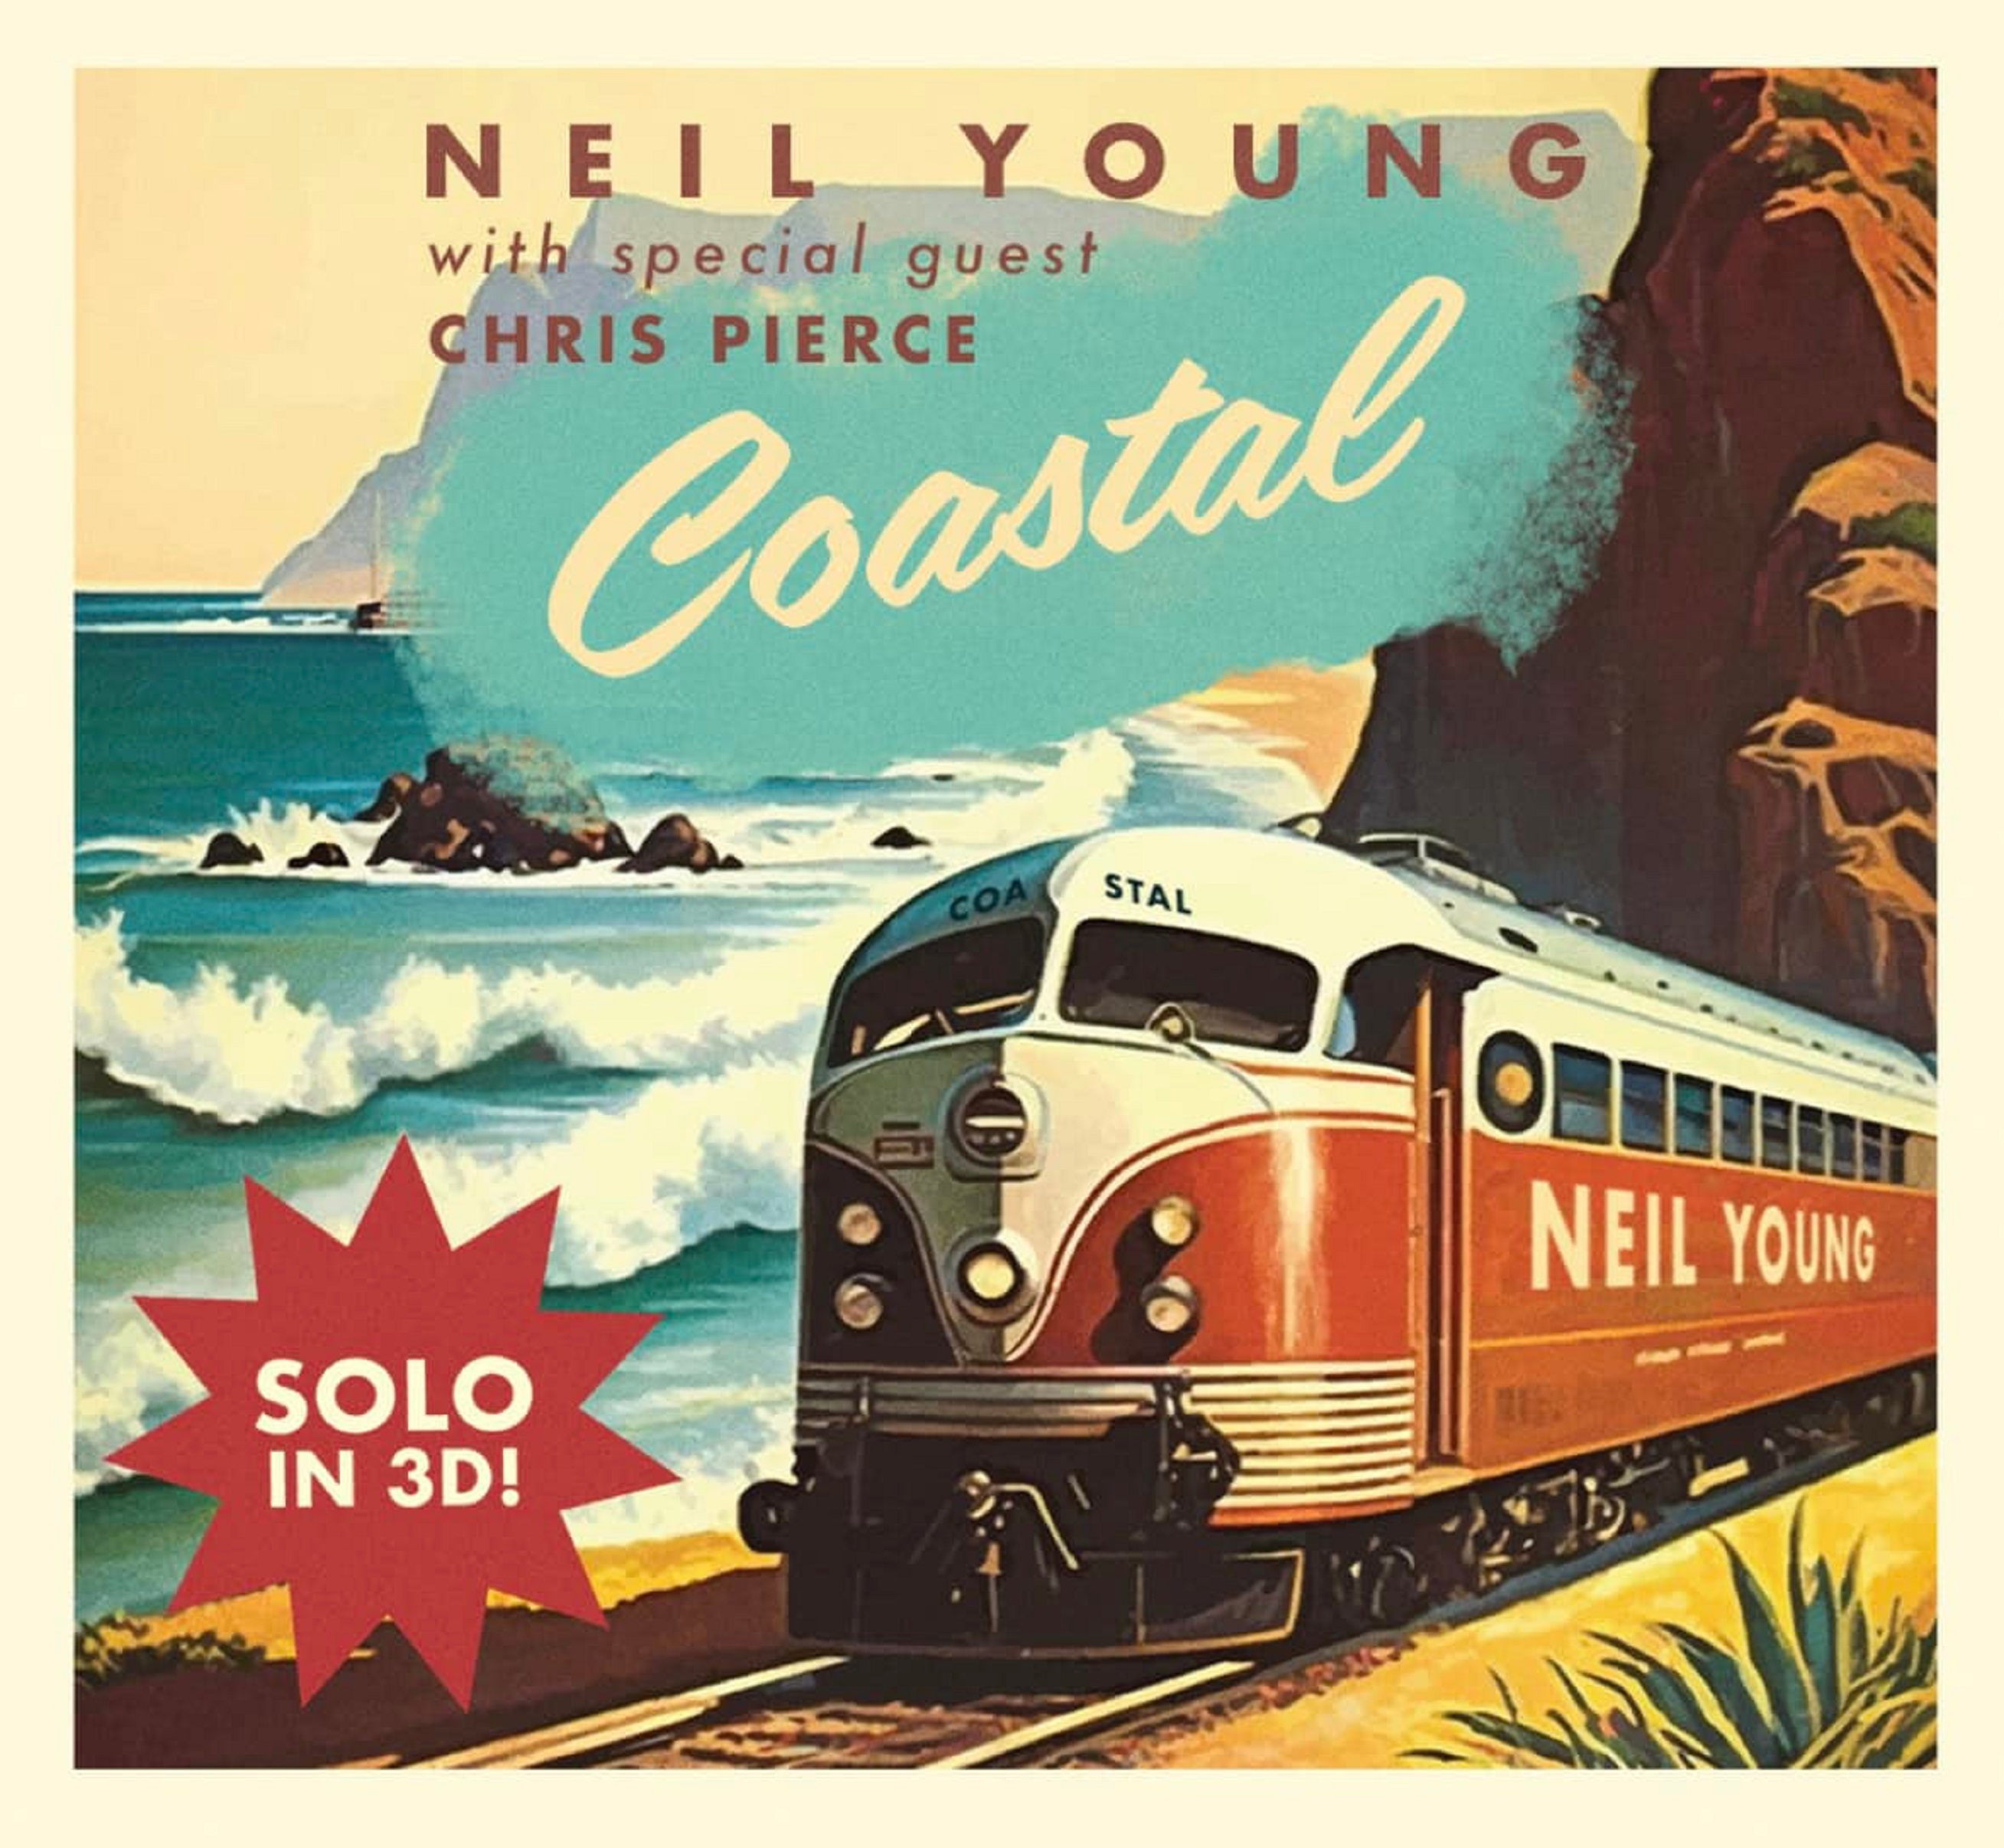 Neil Young Picks LA Americana Soul Singer Chris Pierce to Open Tour